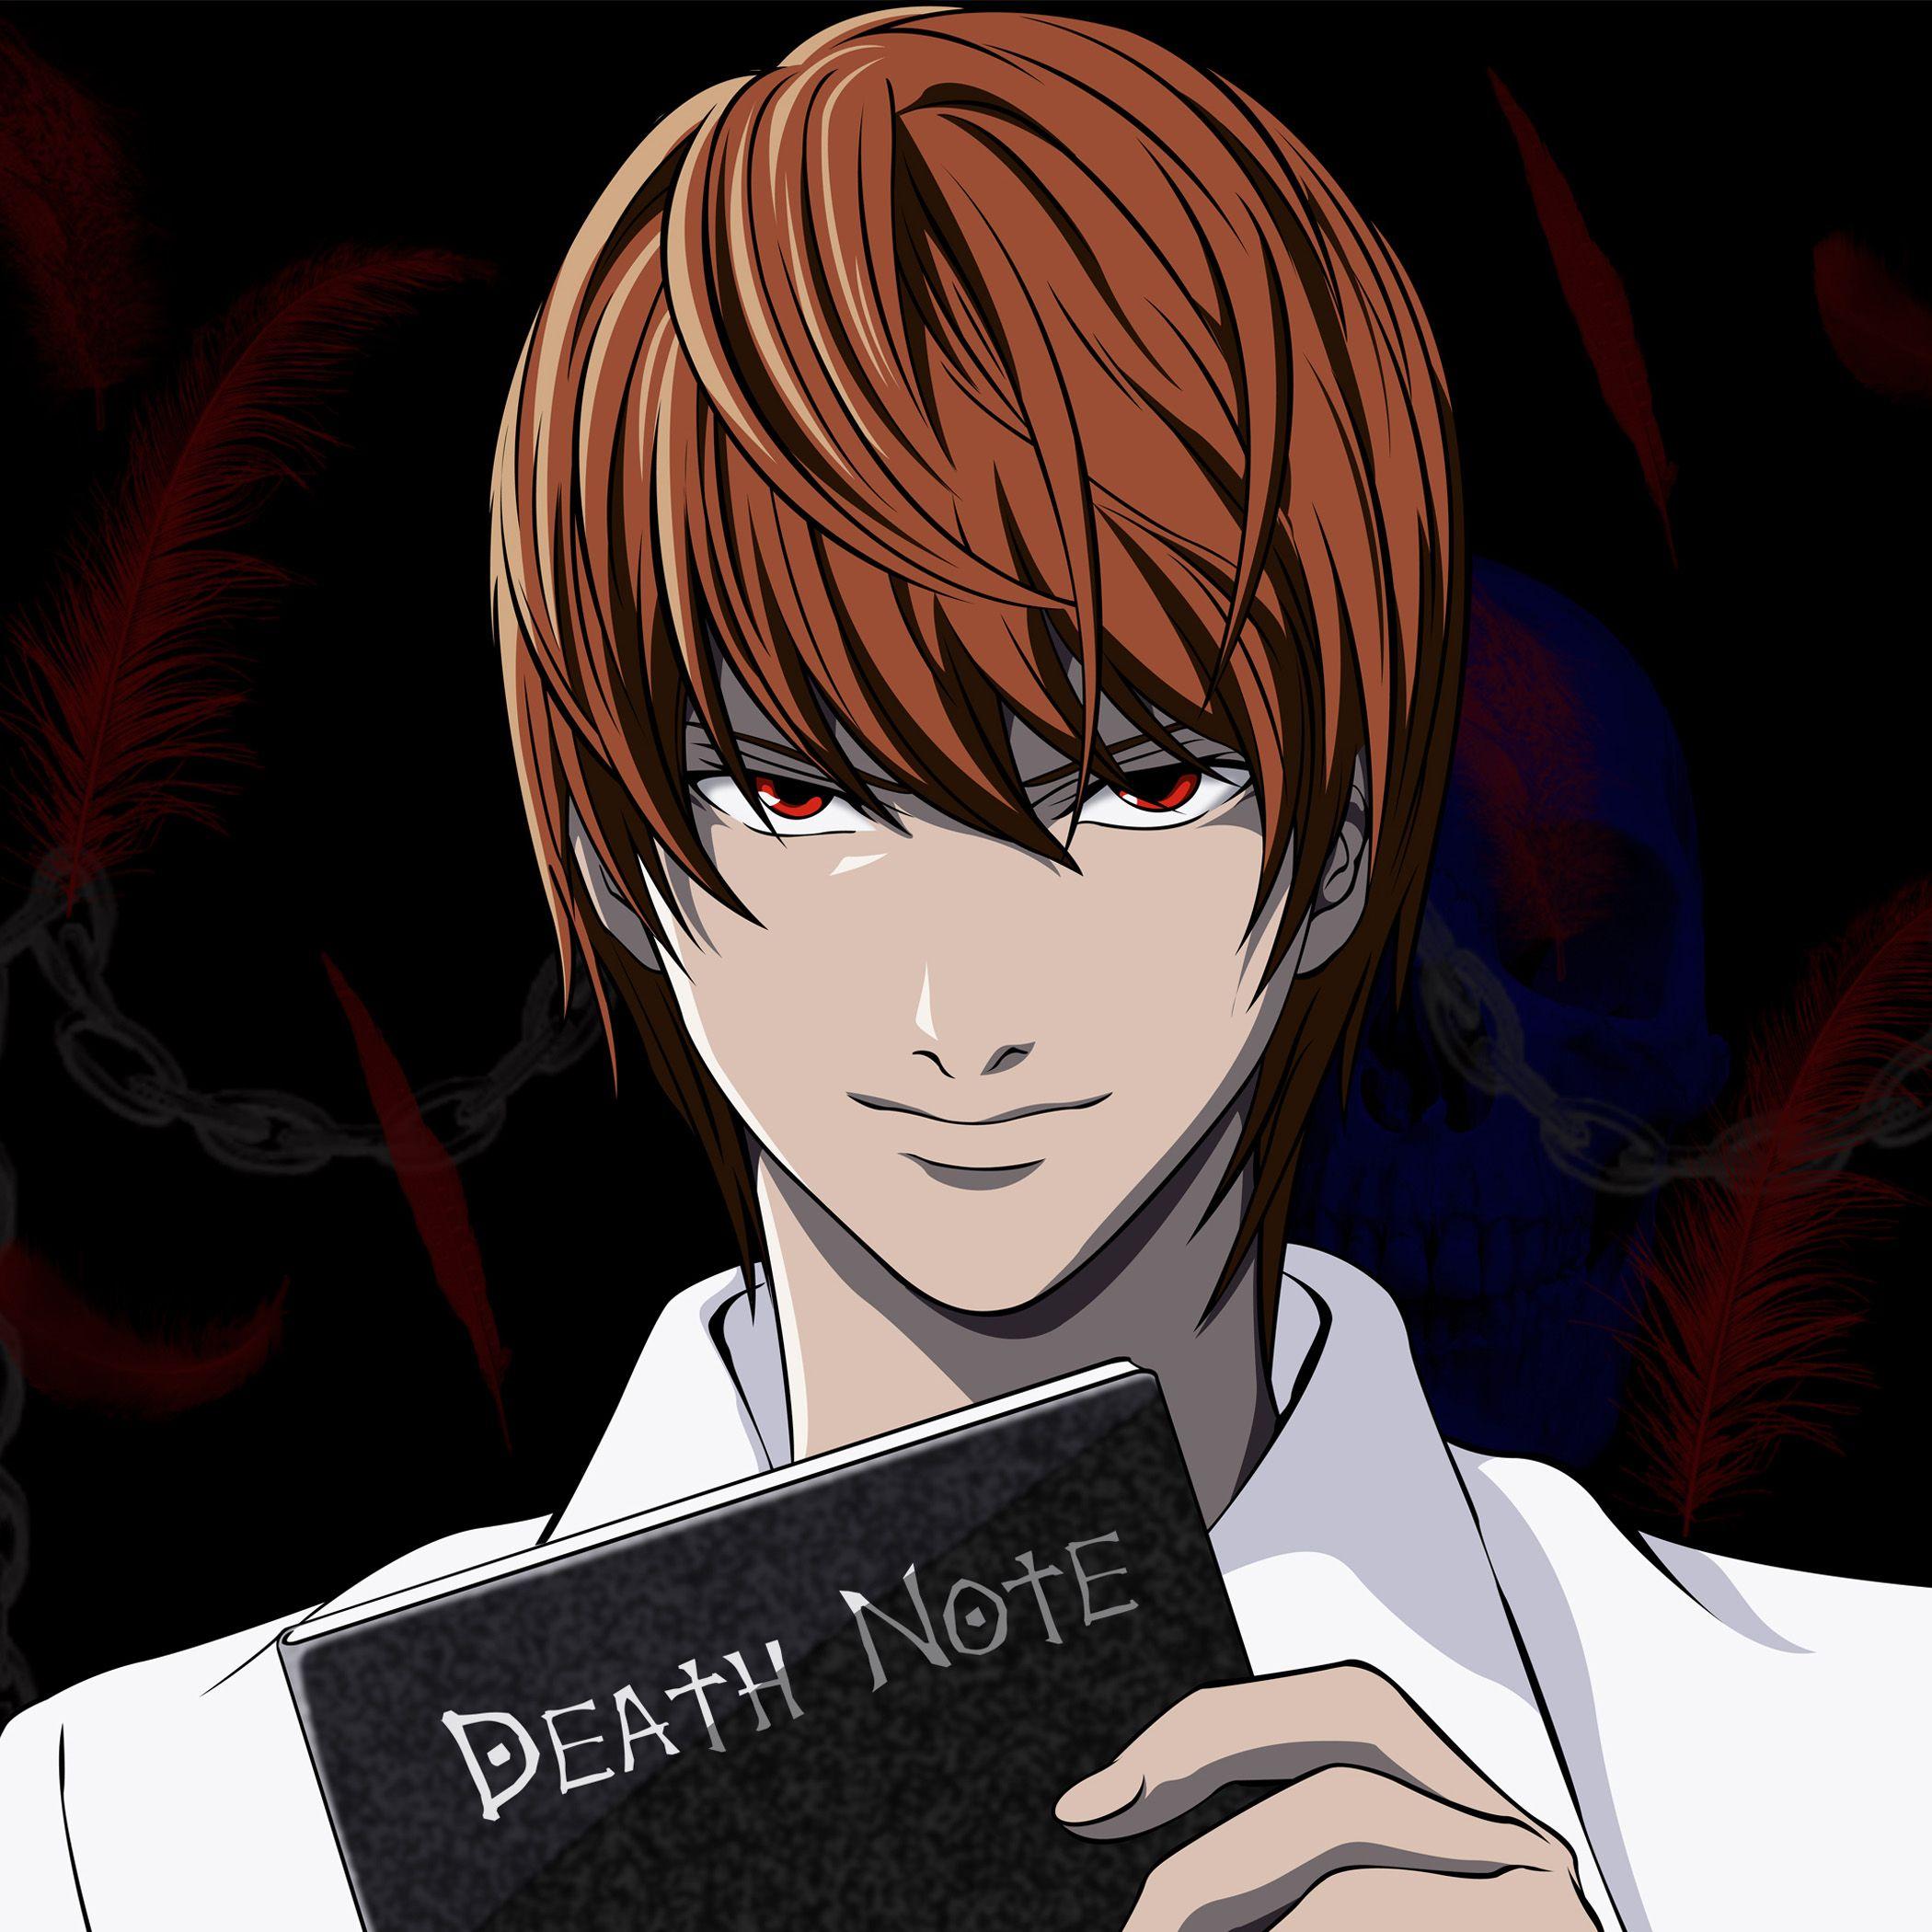 Anime Death Note wallpaper (Desktop, Phone, Tablet)